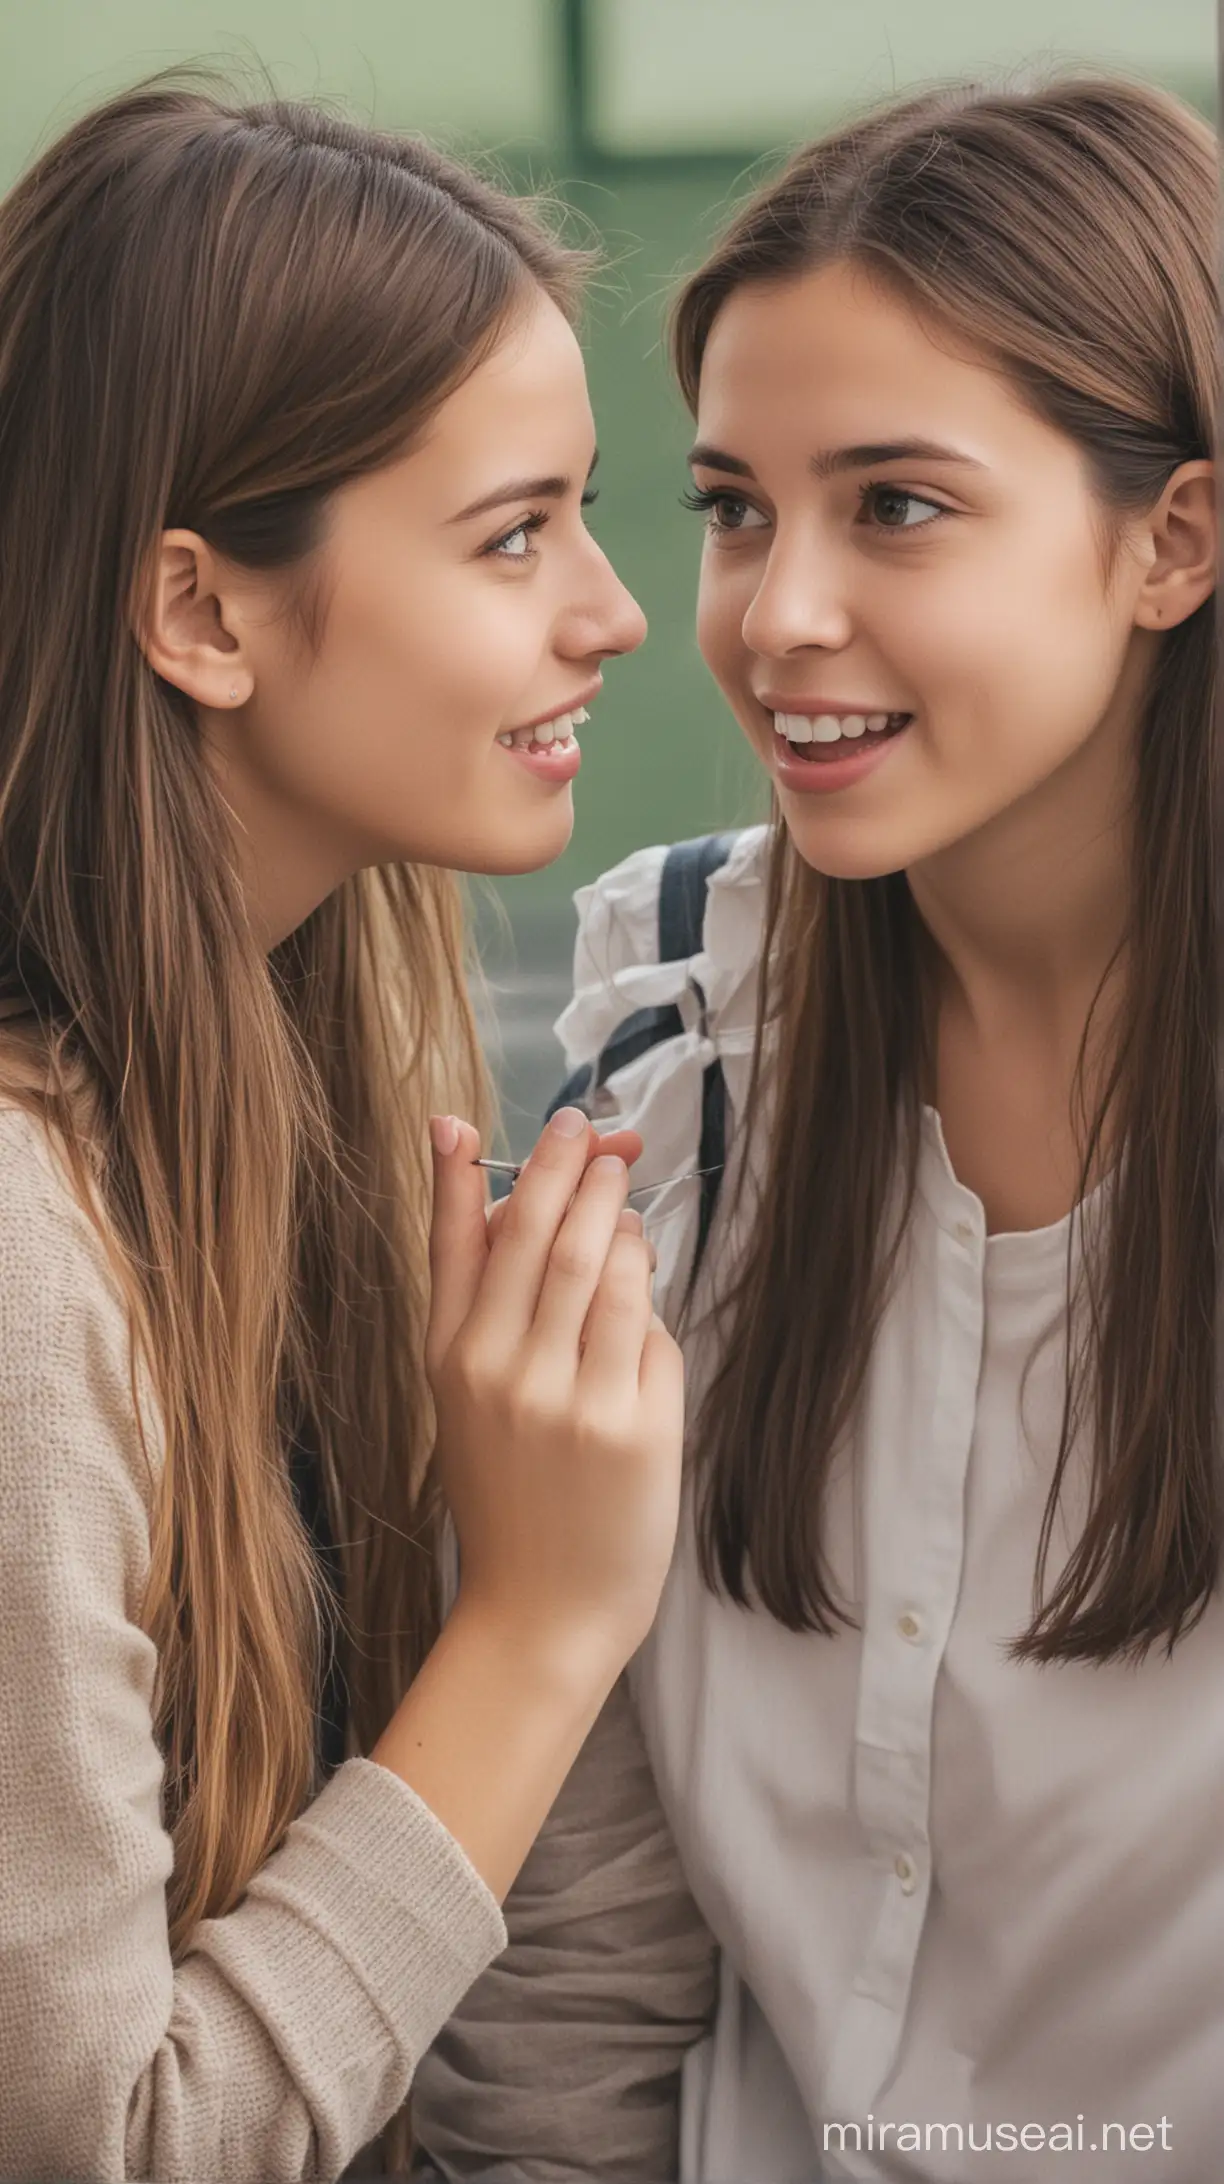 Two girl talking